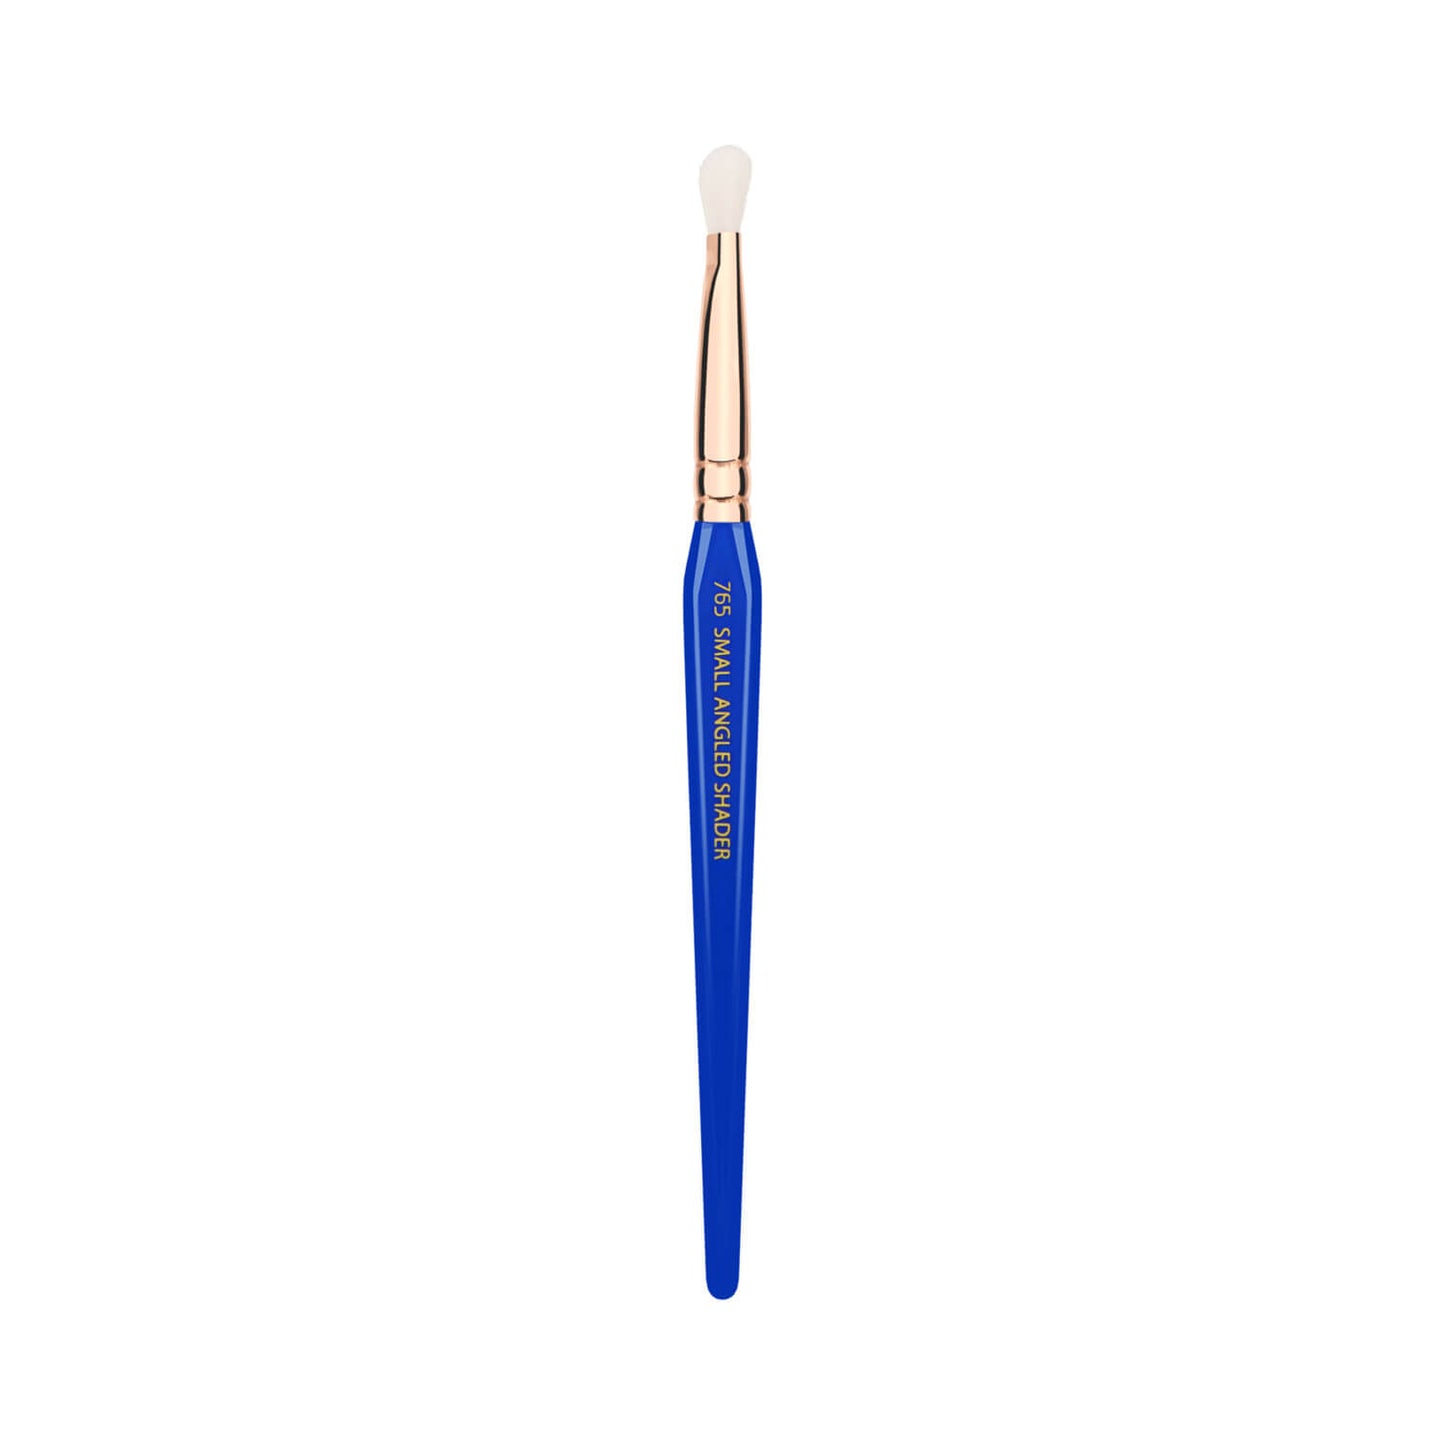 BDellium Tools Golden Triangle 765 Small Angled Shader Brush